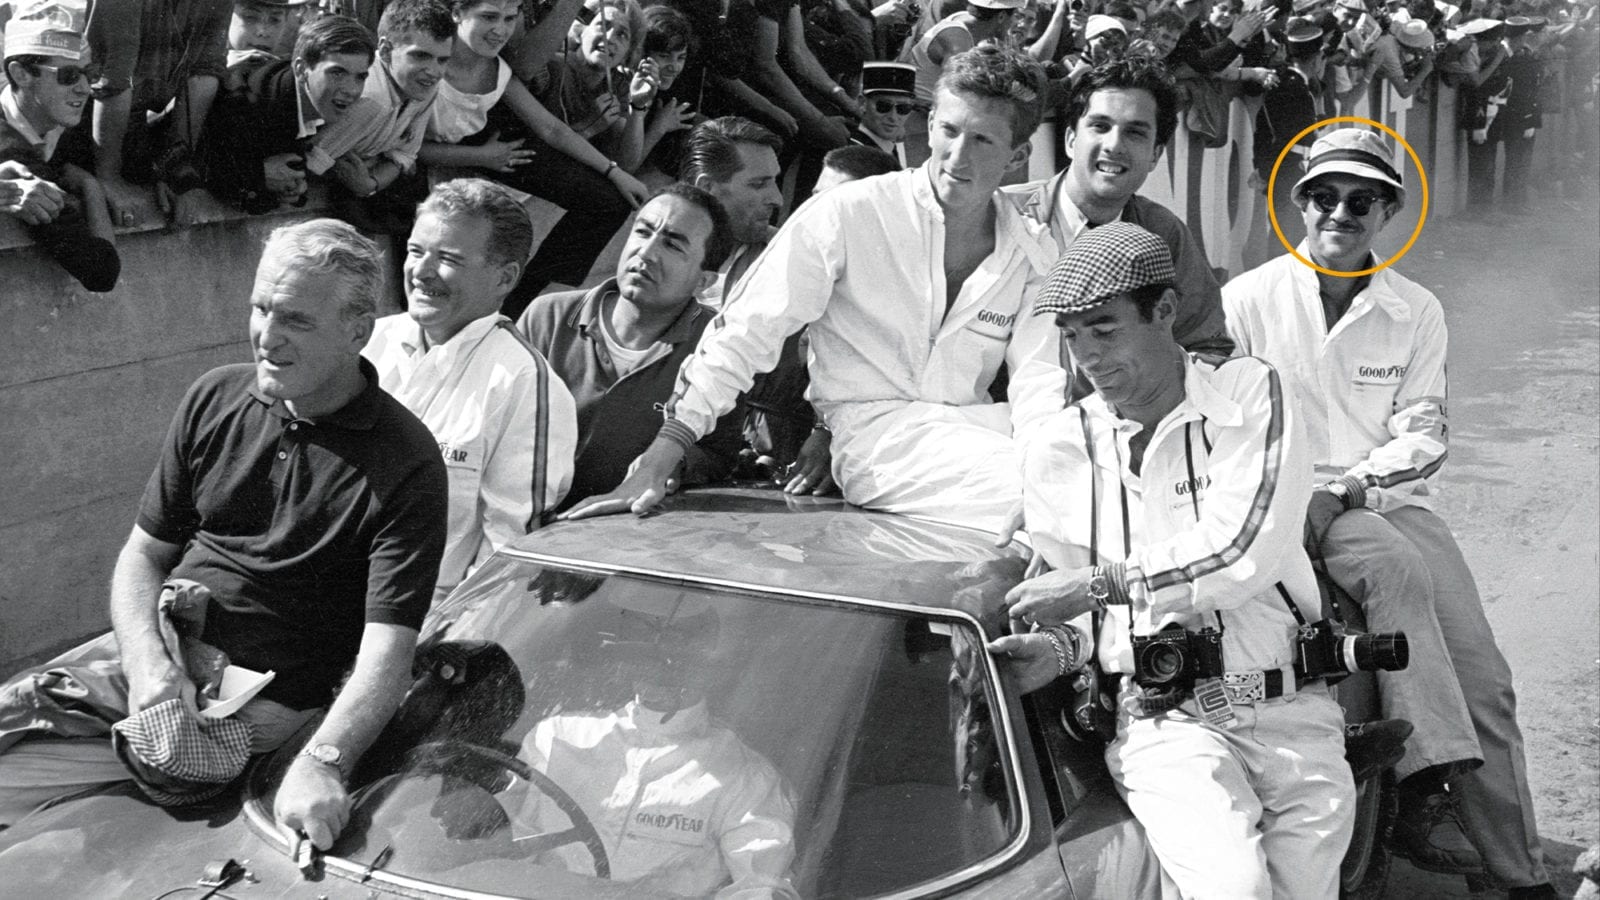 Jochen Rindt Masten Gregory and members of the 1965 Le Mans winning NART Ferrari team including Ed Hugus circled